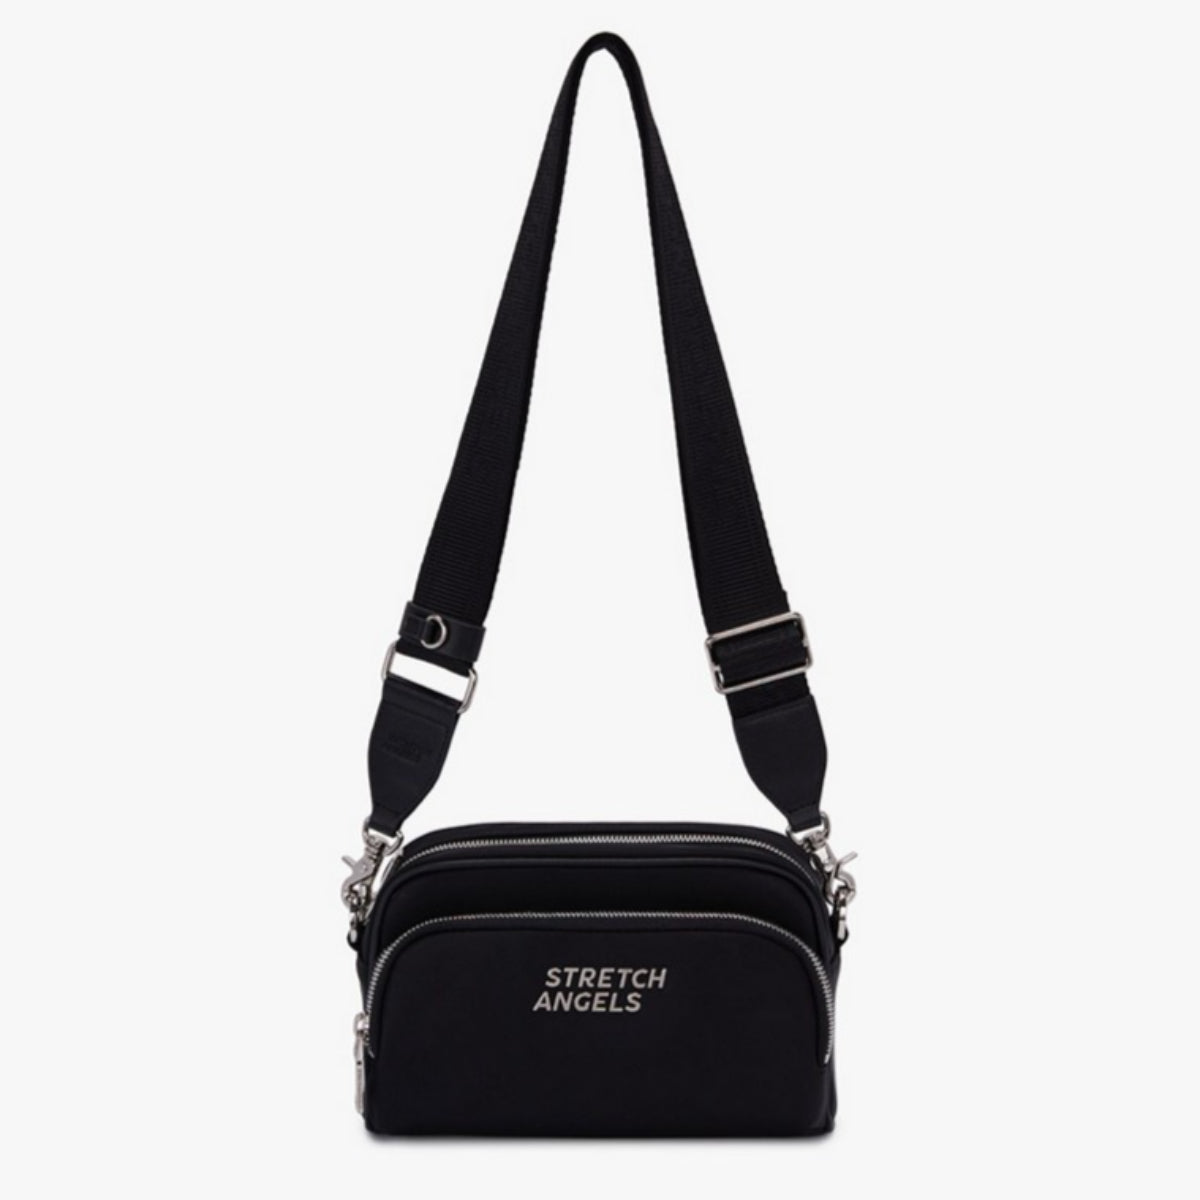 STRETCH ANGELS New Air Panini Bag Black Messenger Shoulder Bag / From Seoul, South Korea